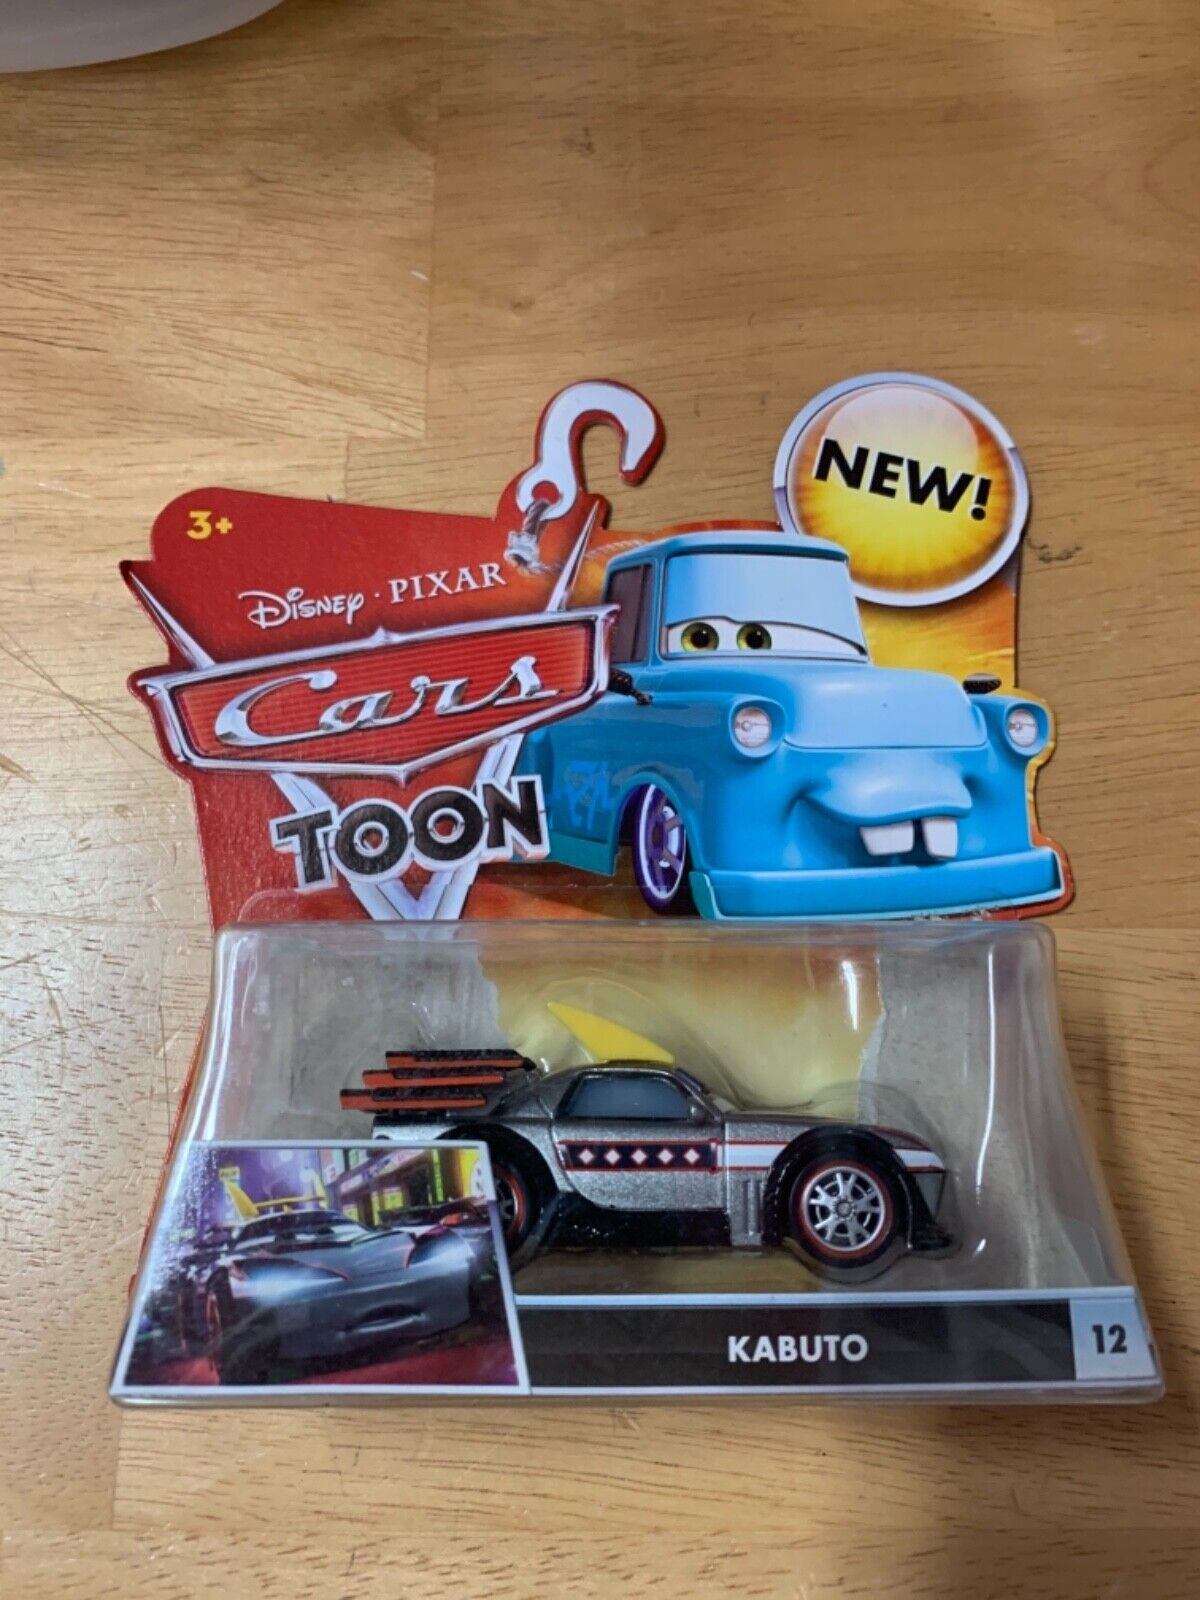 Disney Pixar Cars Toon Kabuto Opened RARE